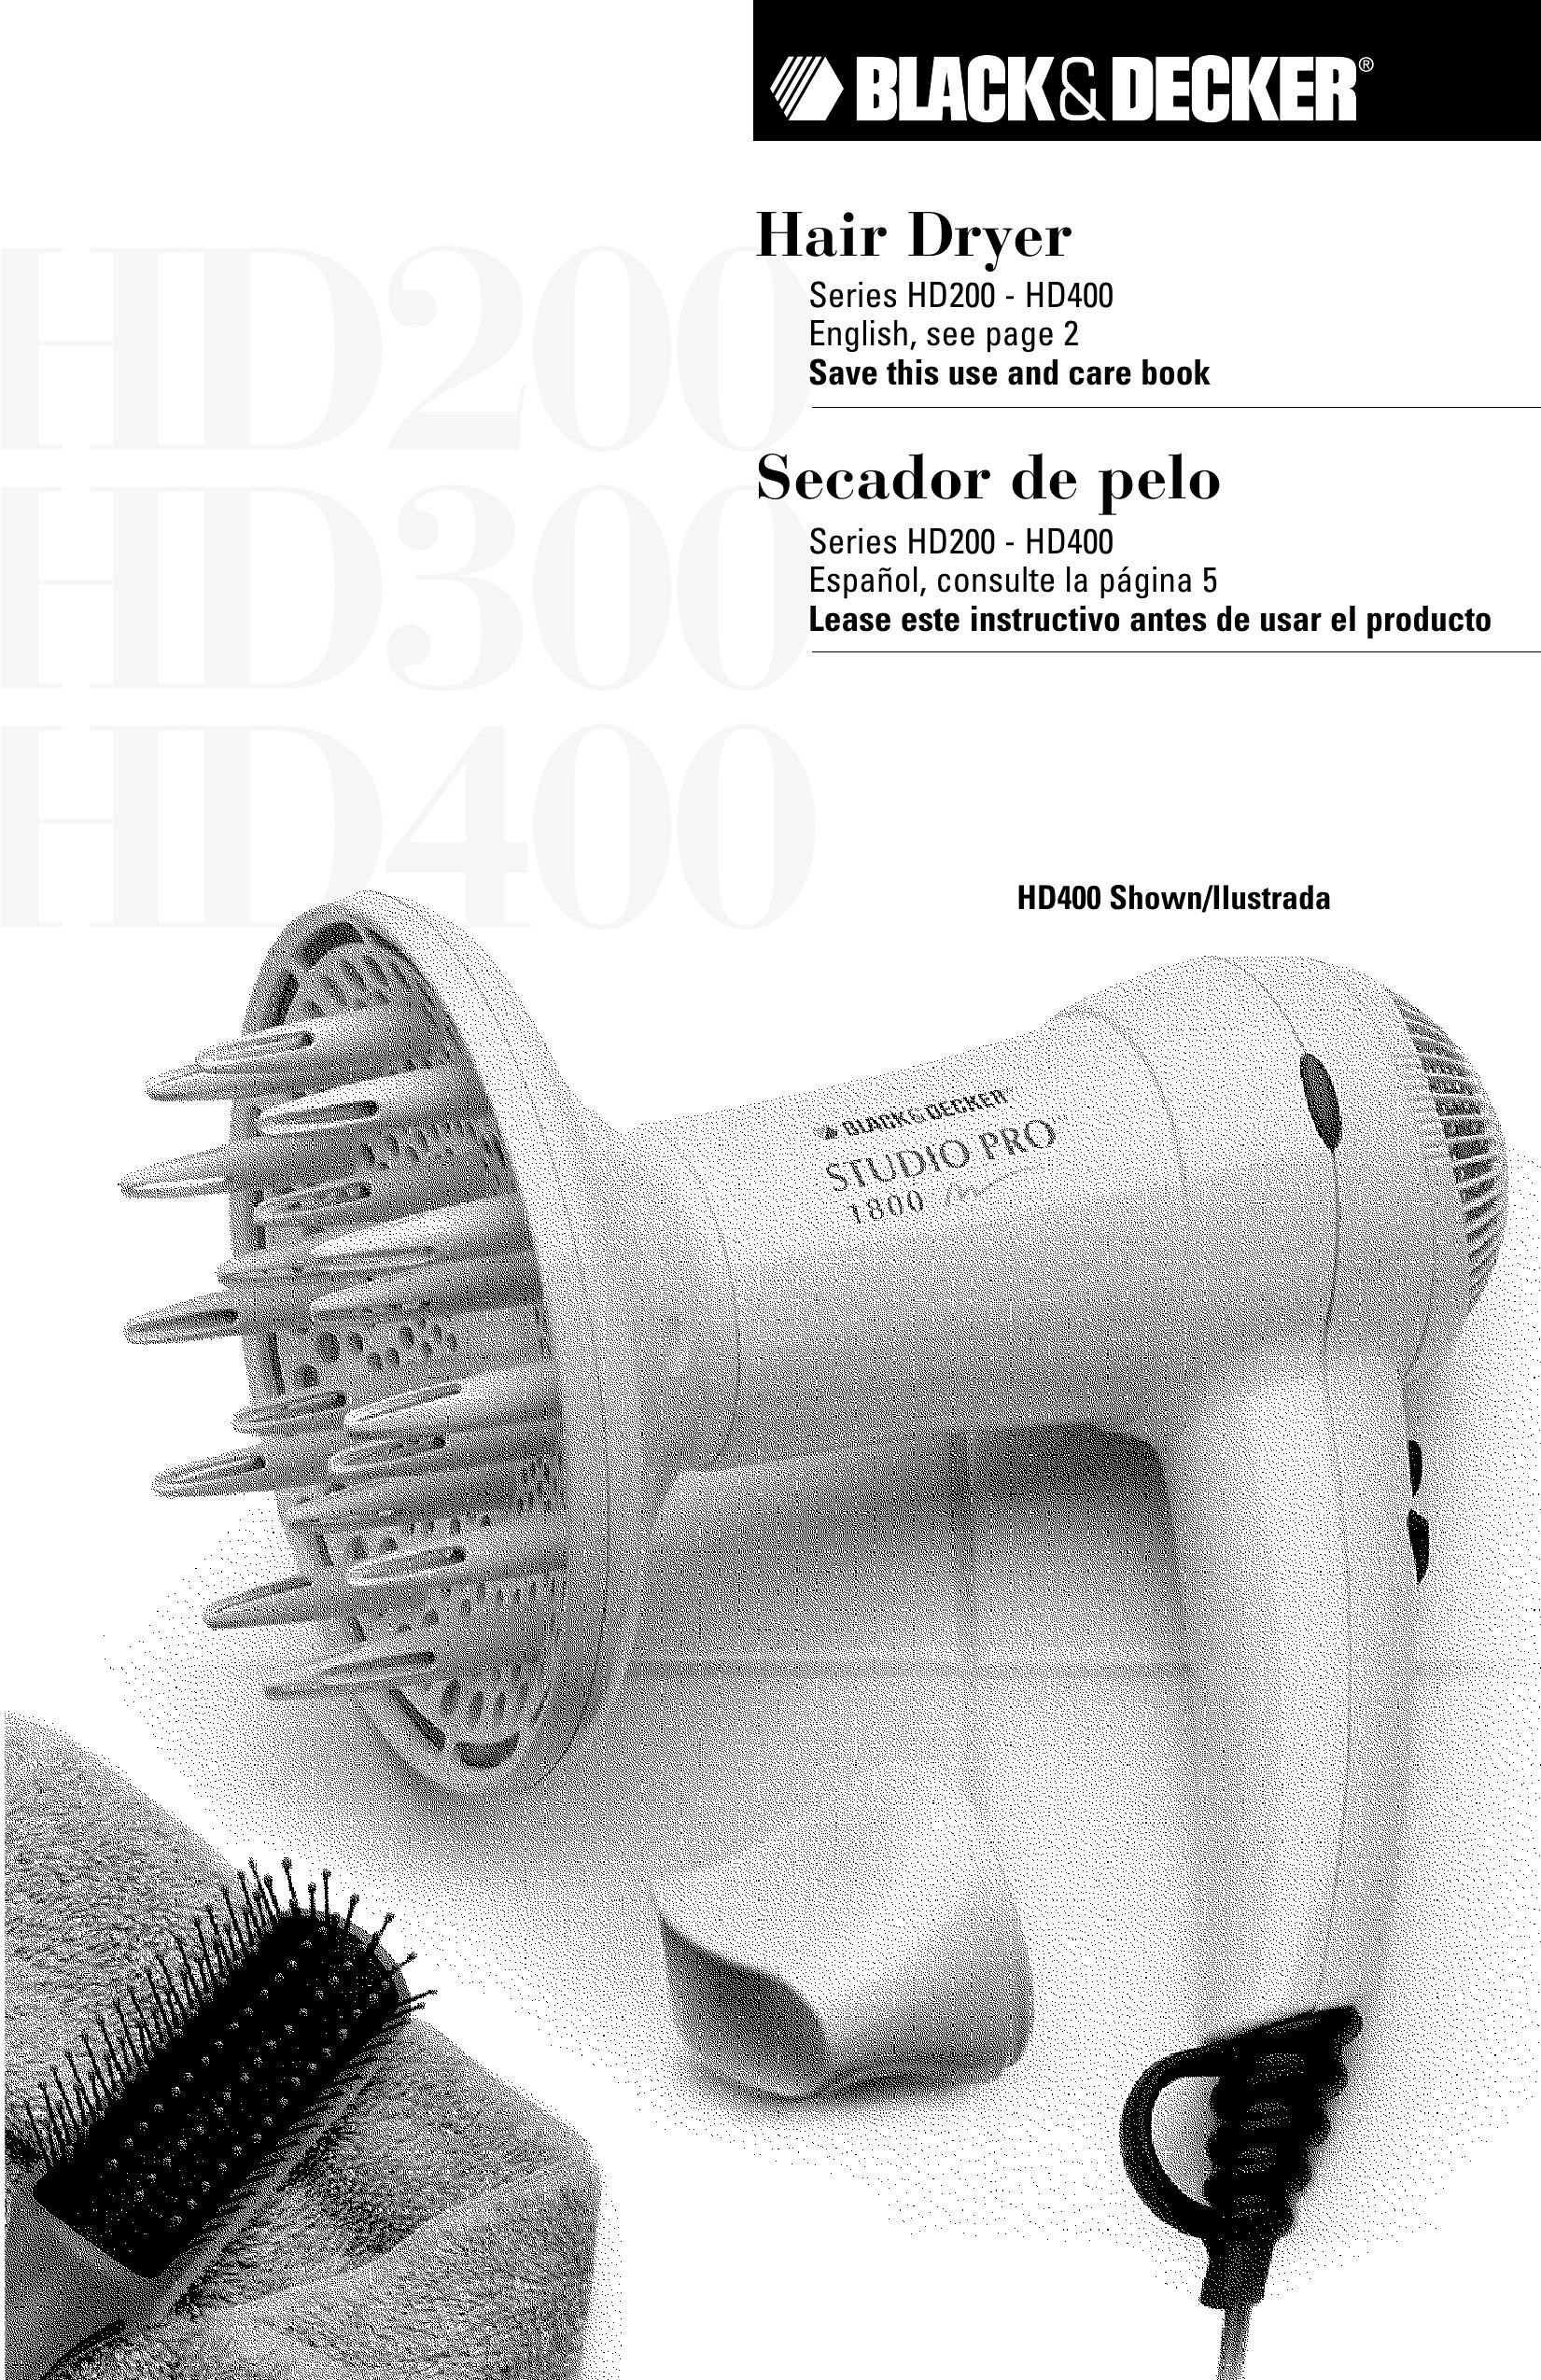 Black & Decker HD400 Hair Dryer User Manual